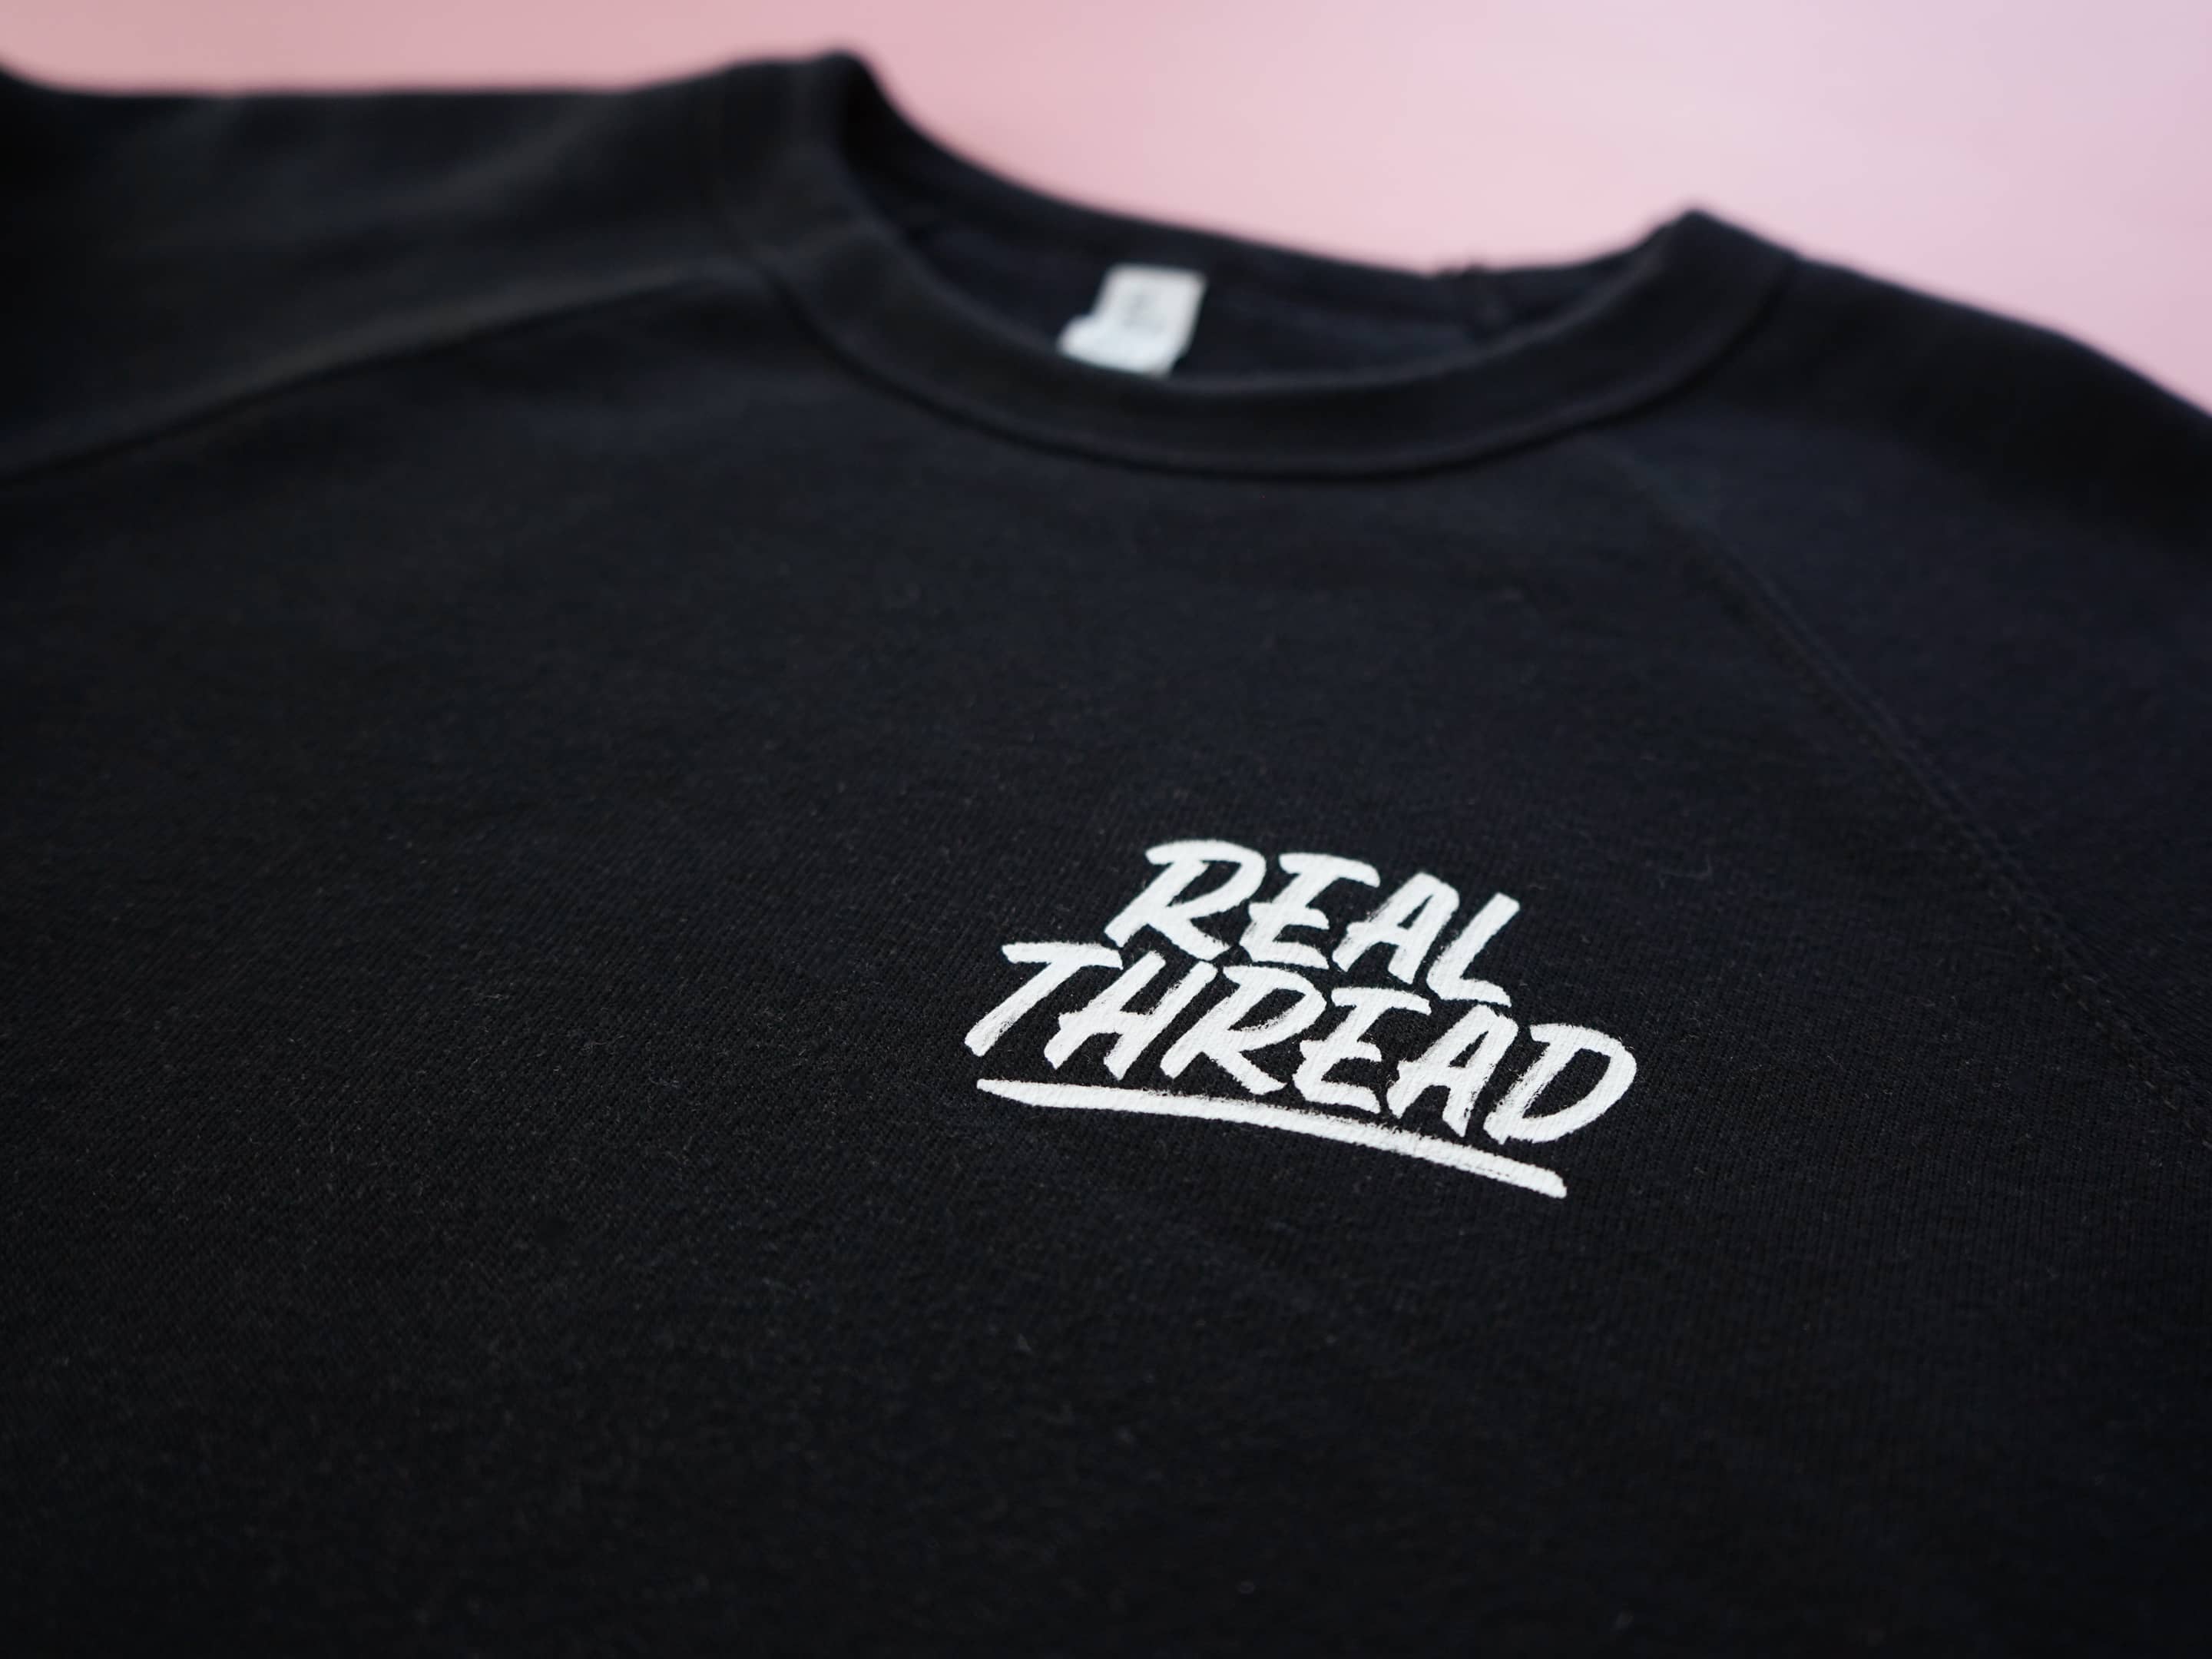 Real Thread T-Shirt Design